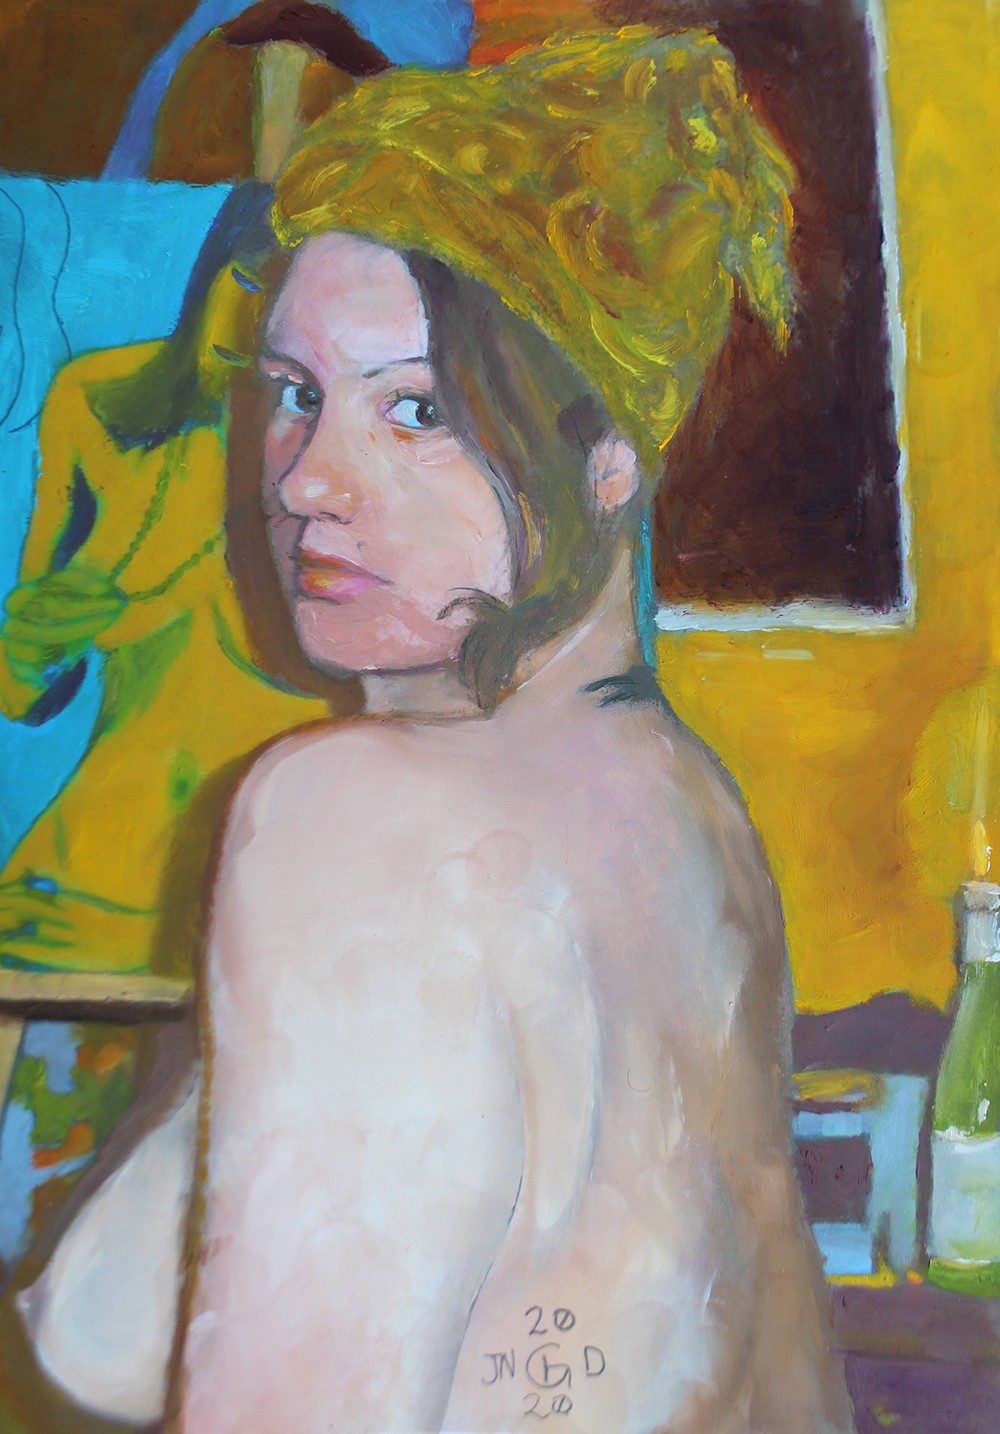 7. The Painting Student II - Grégory Huck